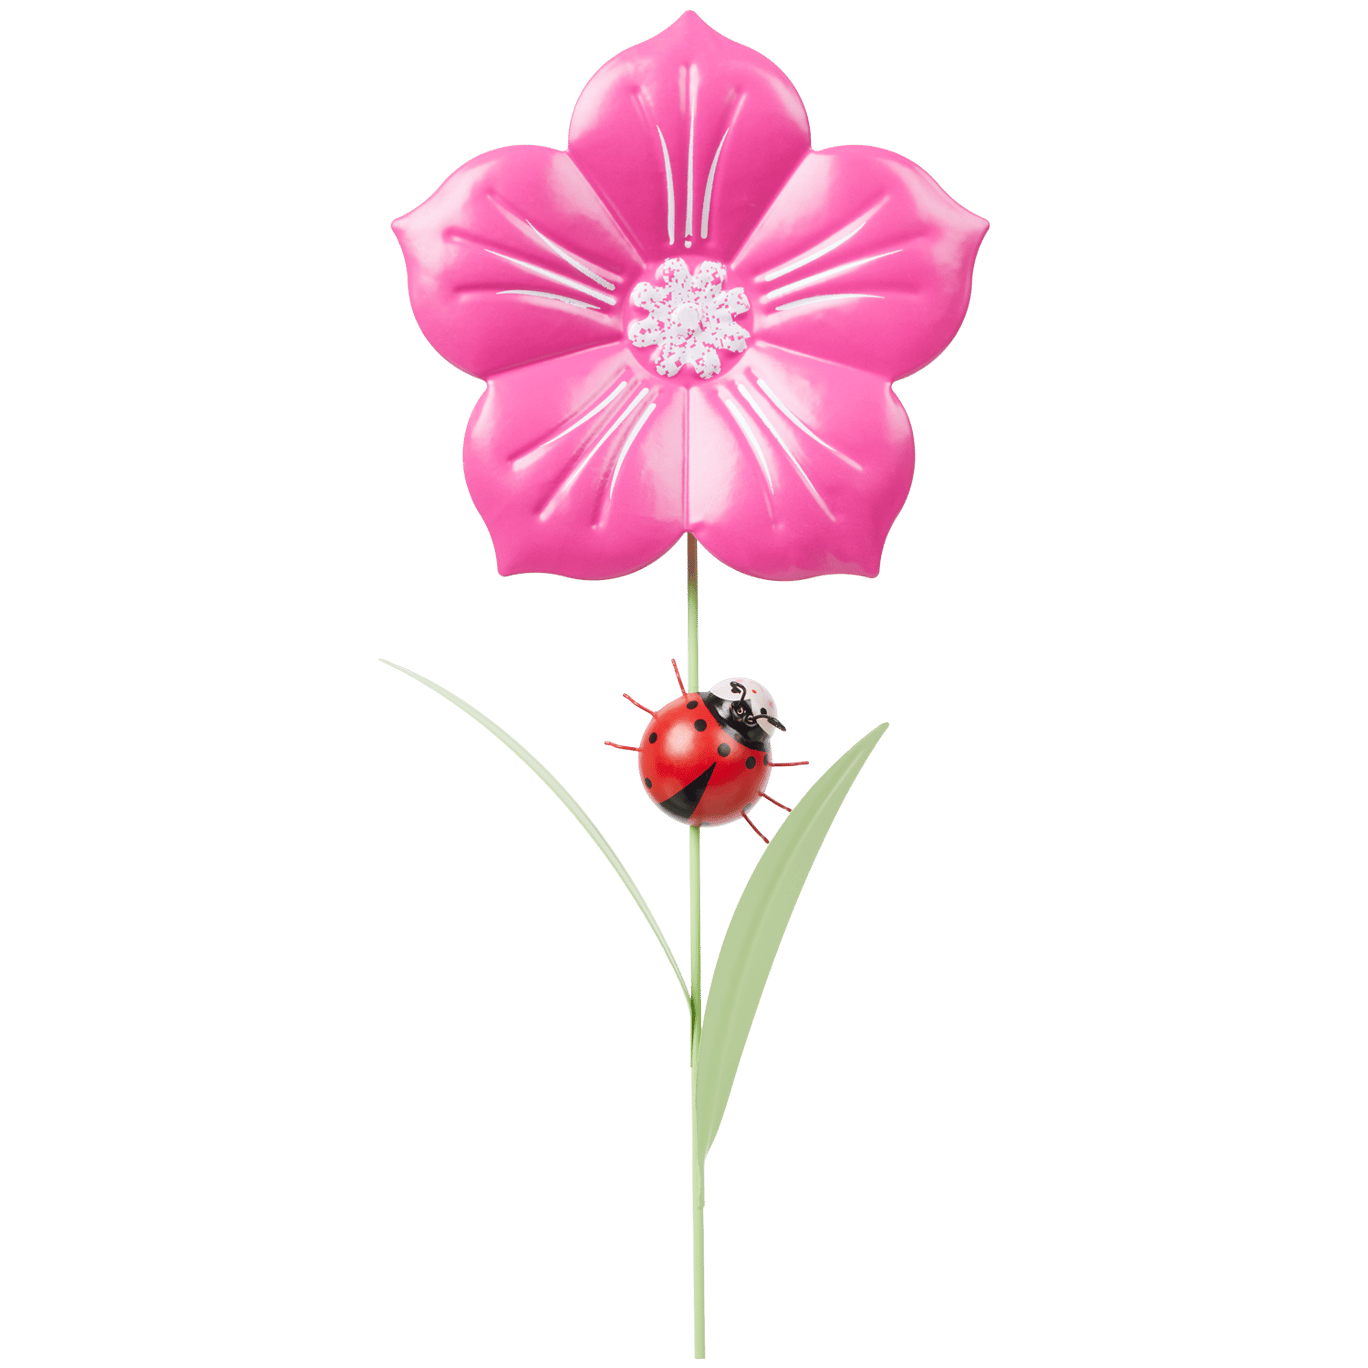 Ozdoba do ogrodu kwiat Home Accents